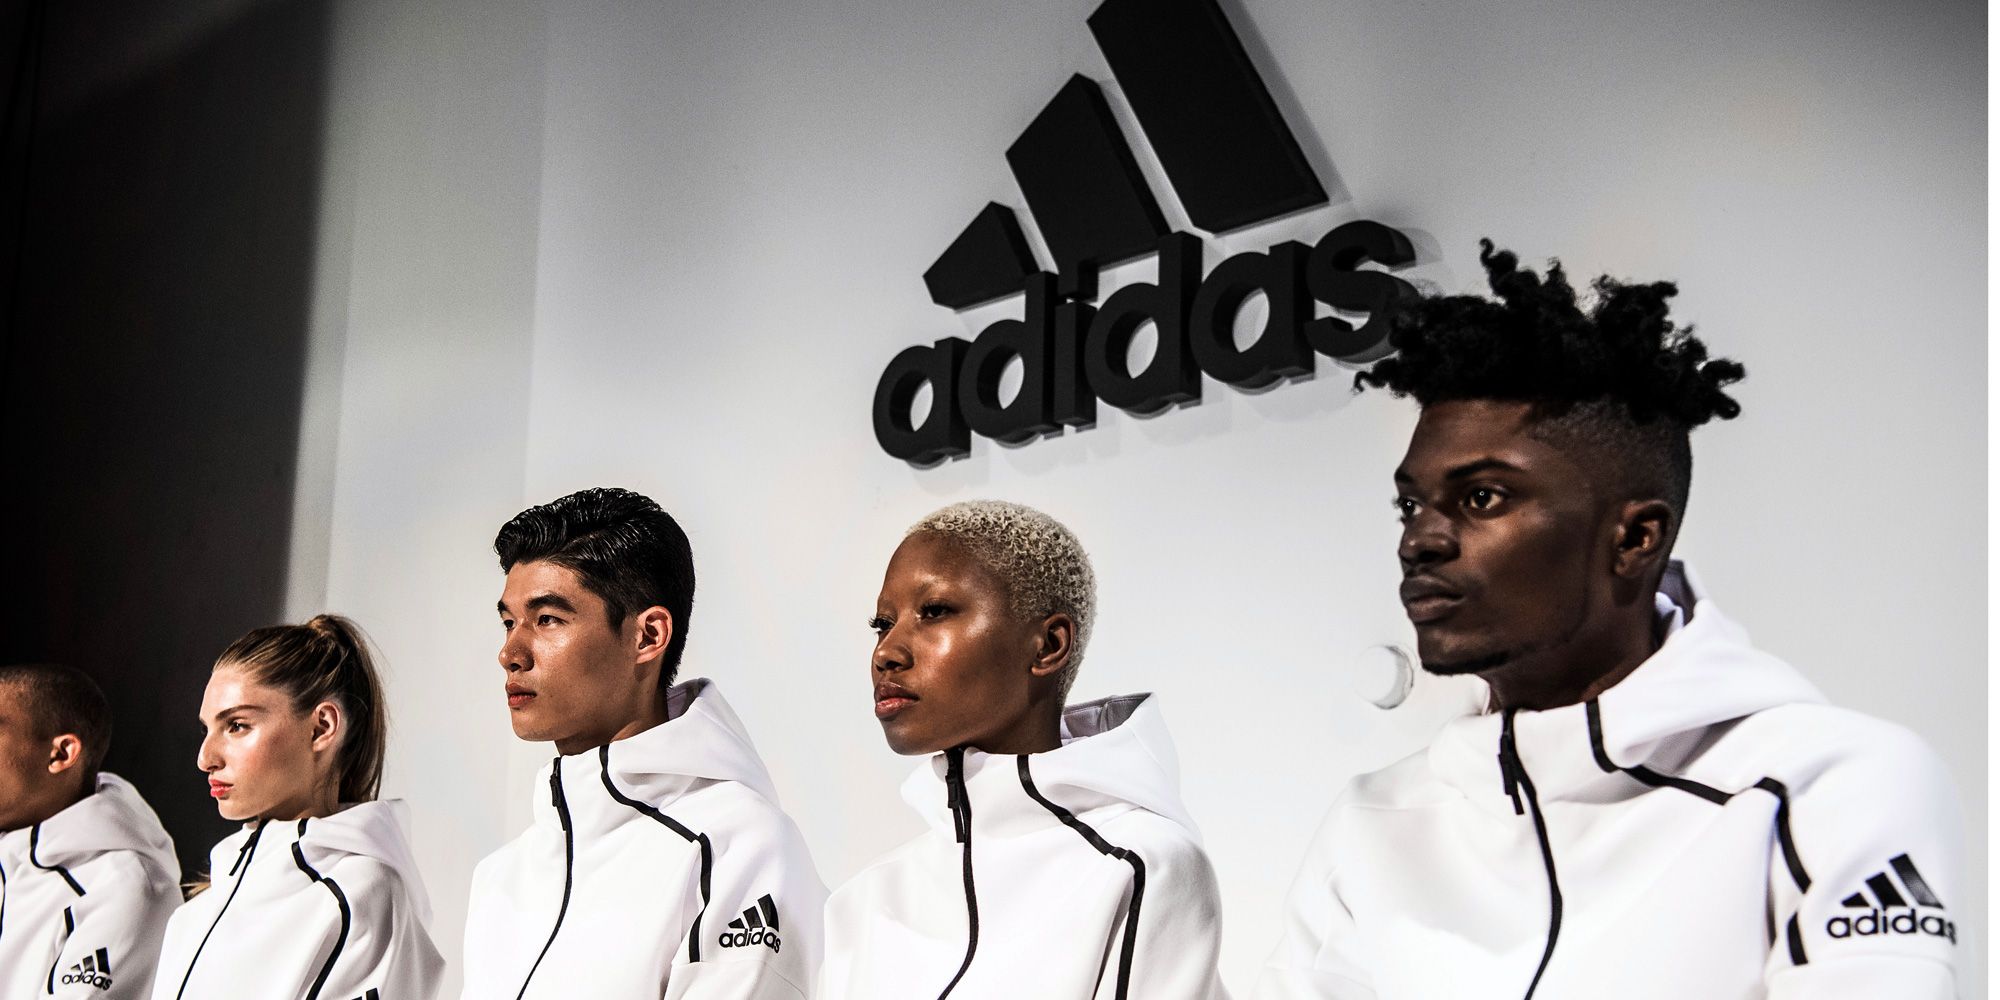 uophørlige dannelse Samuel Adidas' New Clothing Line Blends Style and Performance